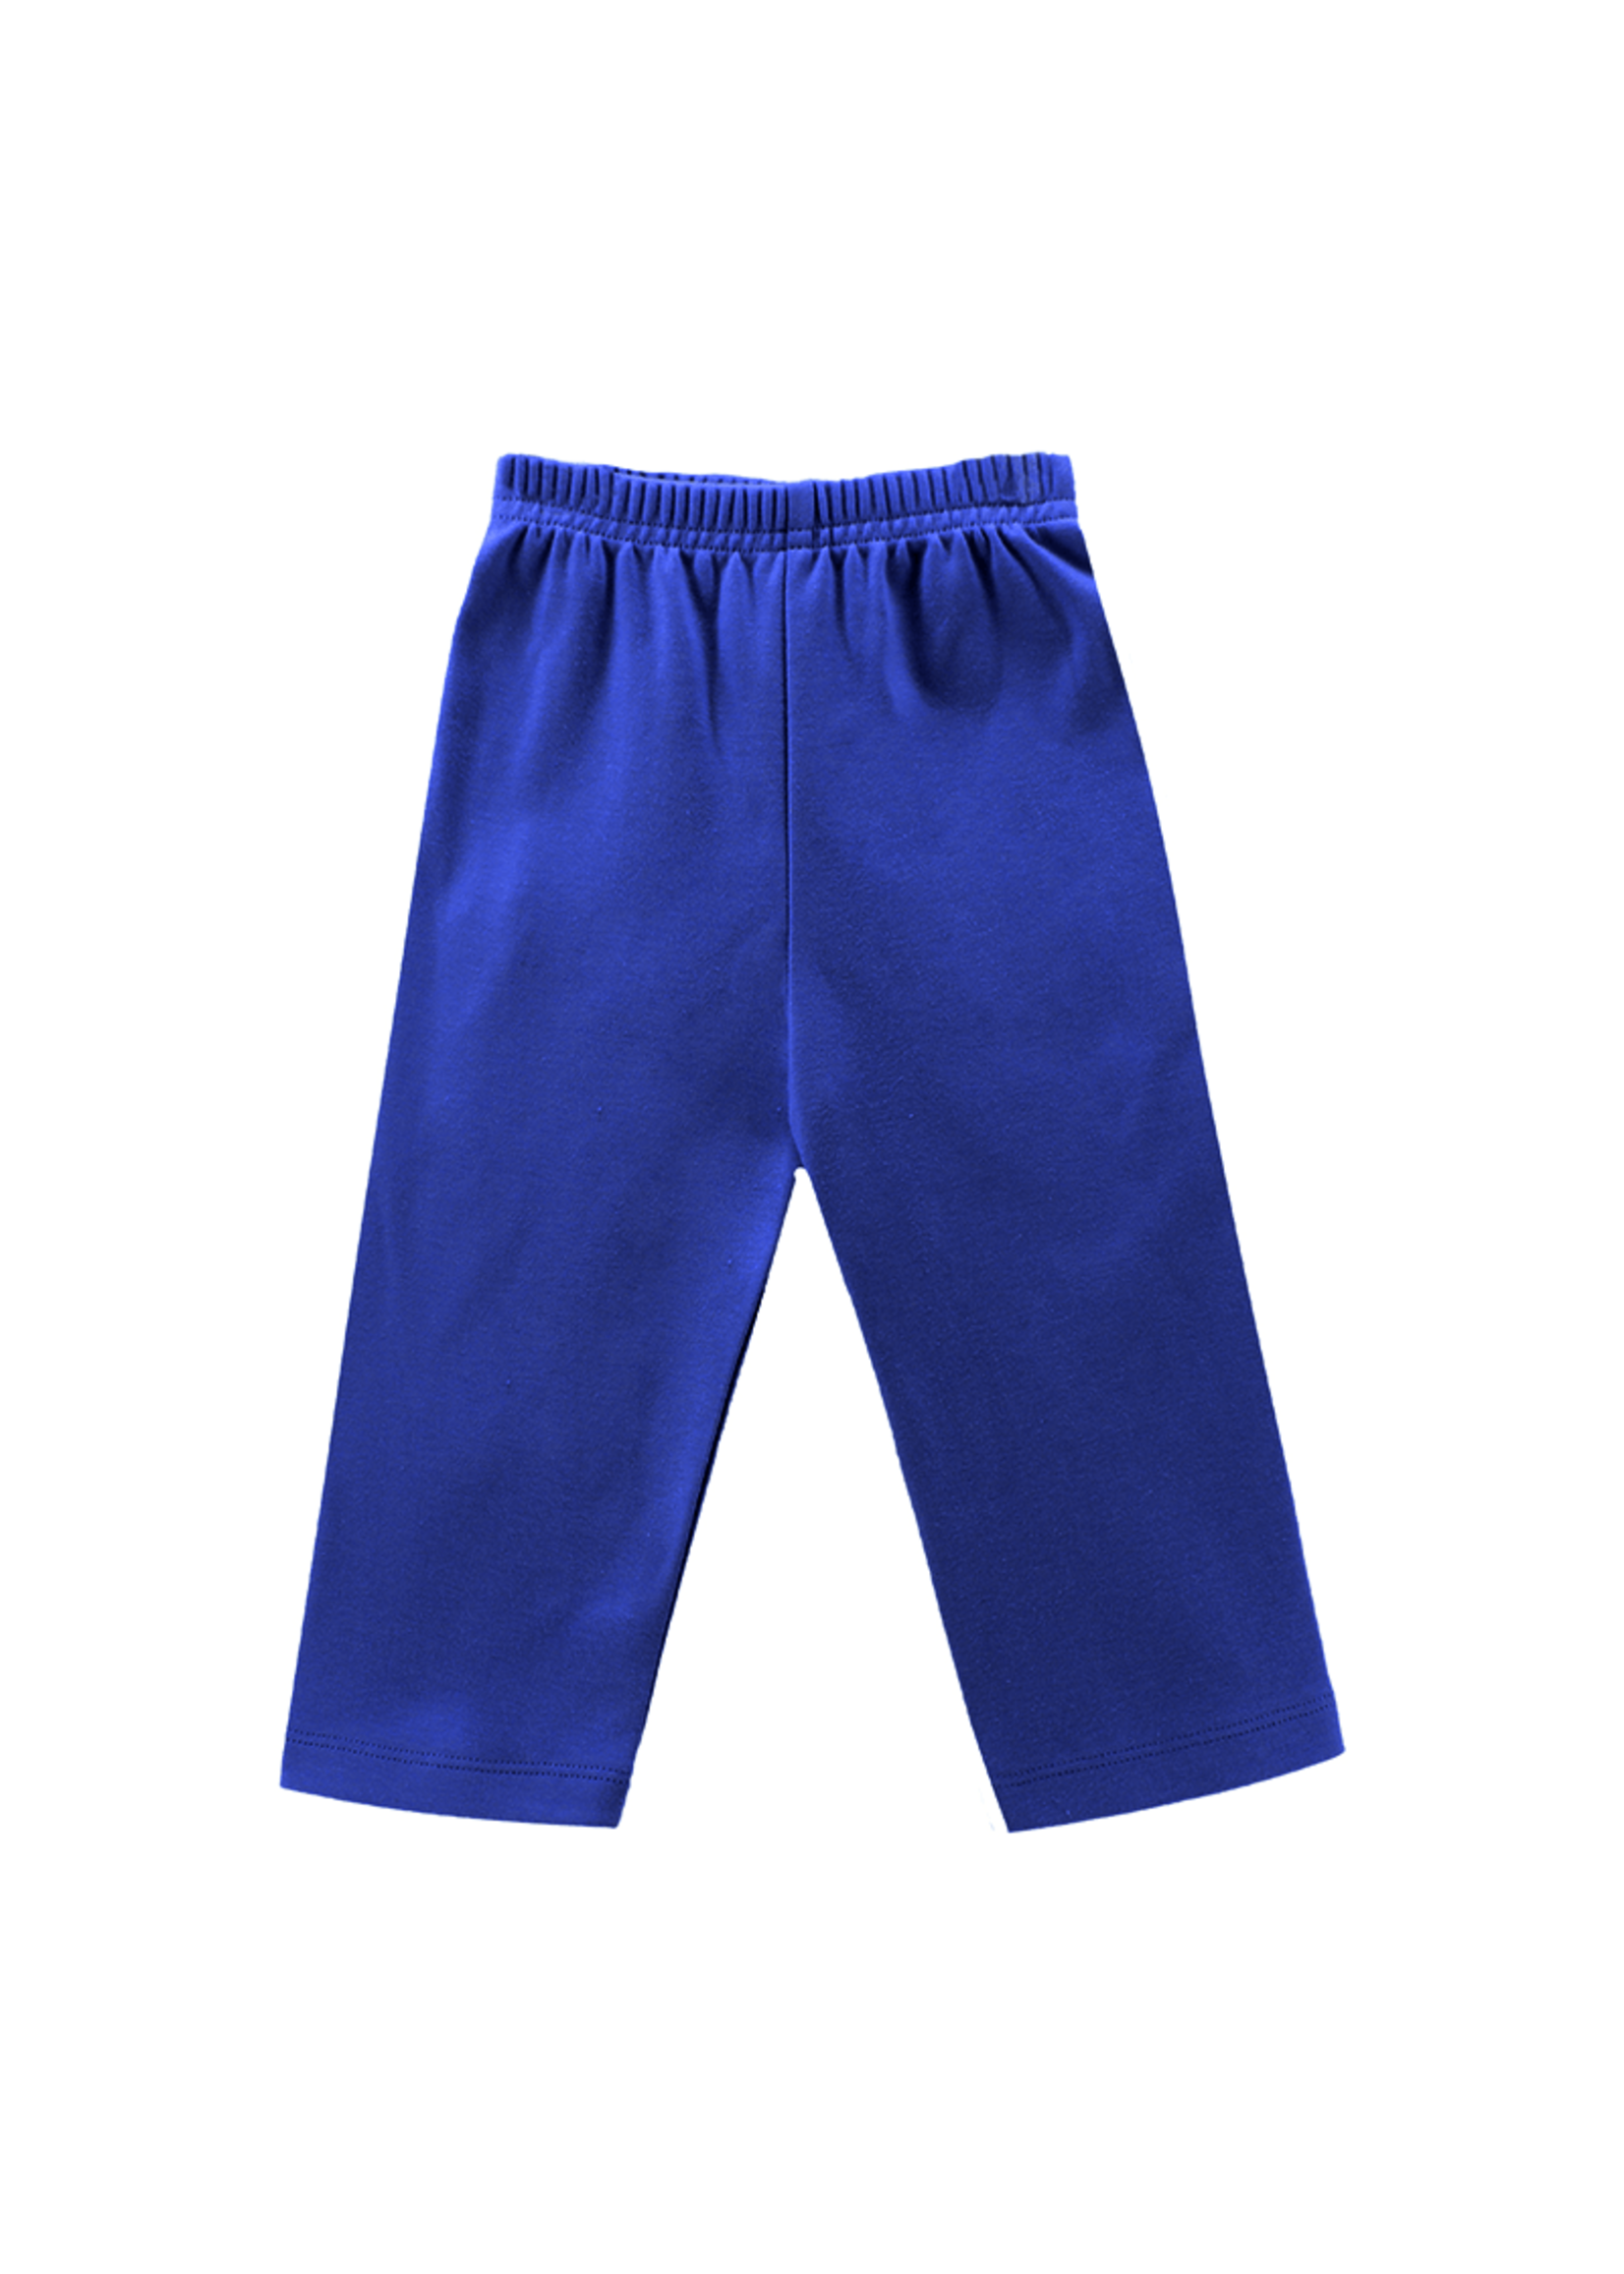 Zuccini Kids Firetruck Leo Pant - Royal Blue Knit